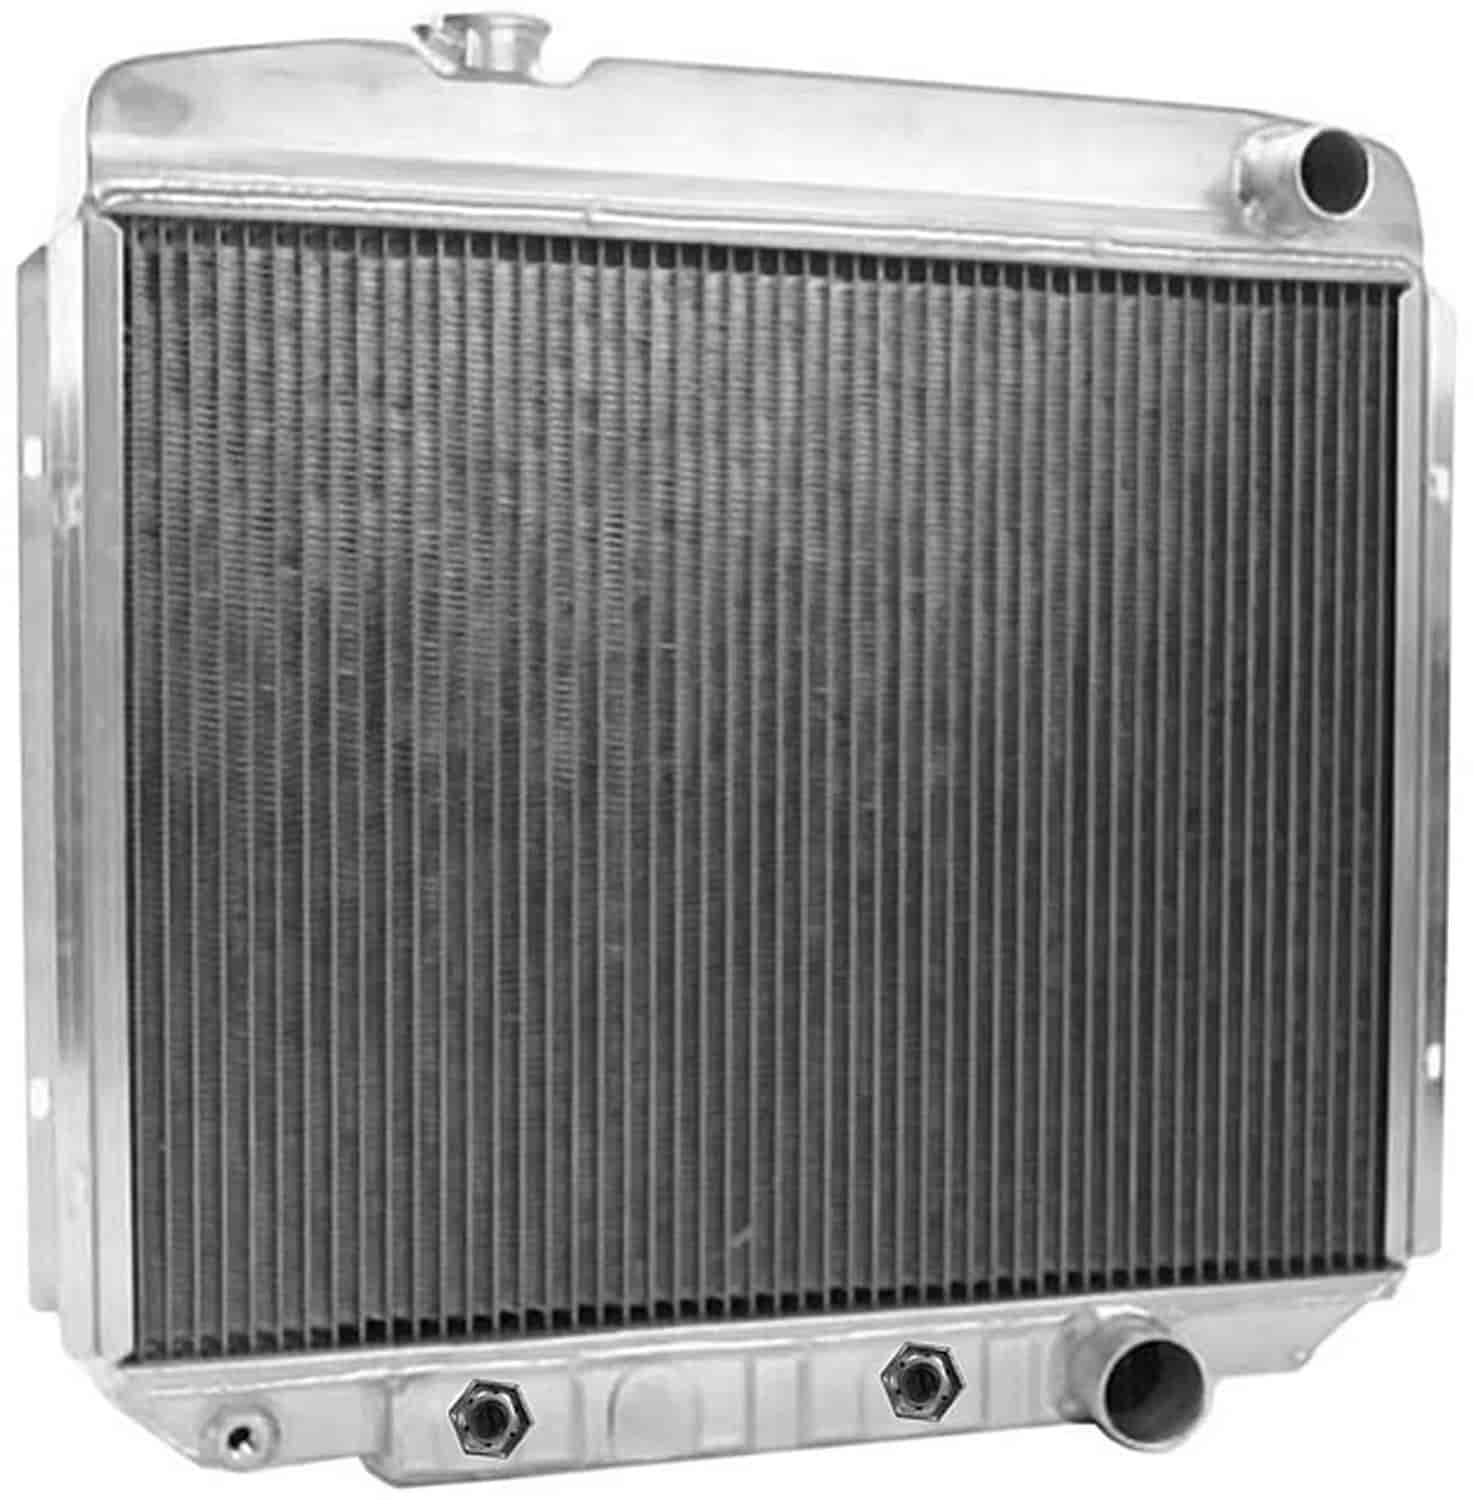 ExactFit Radiator for 1967-1969 Fairlane, Falcon, Torino, Galaxie, & LTD with Early Small Block